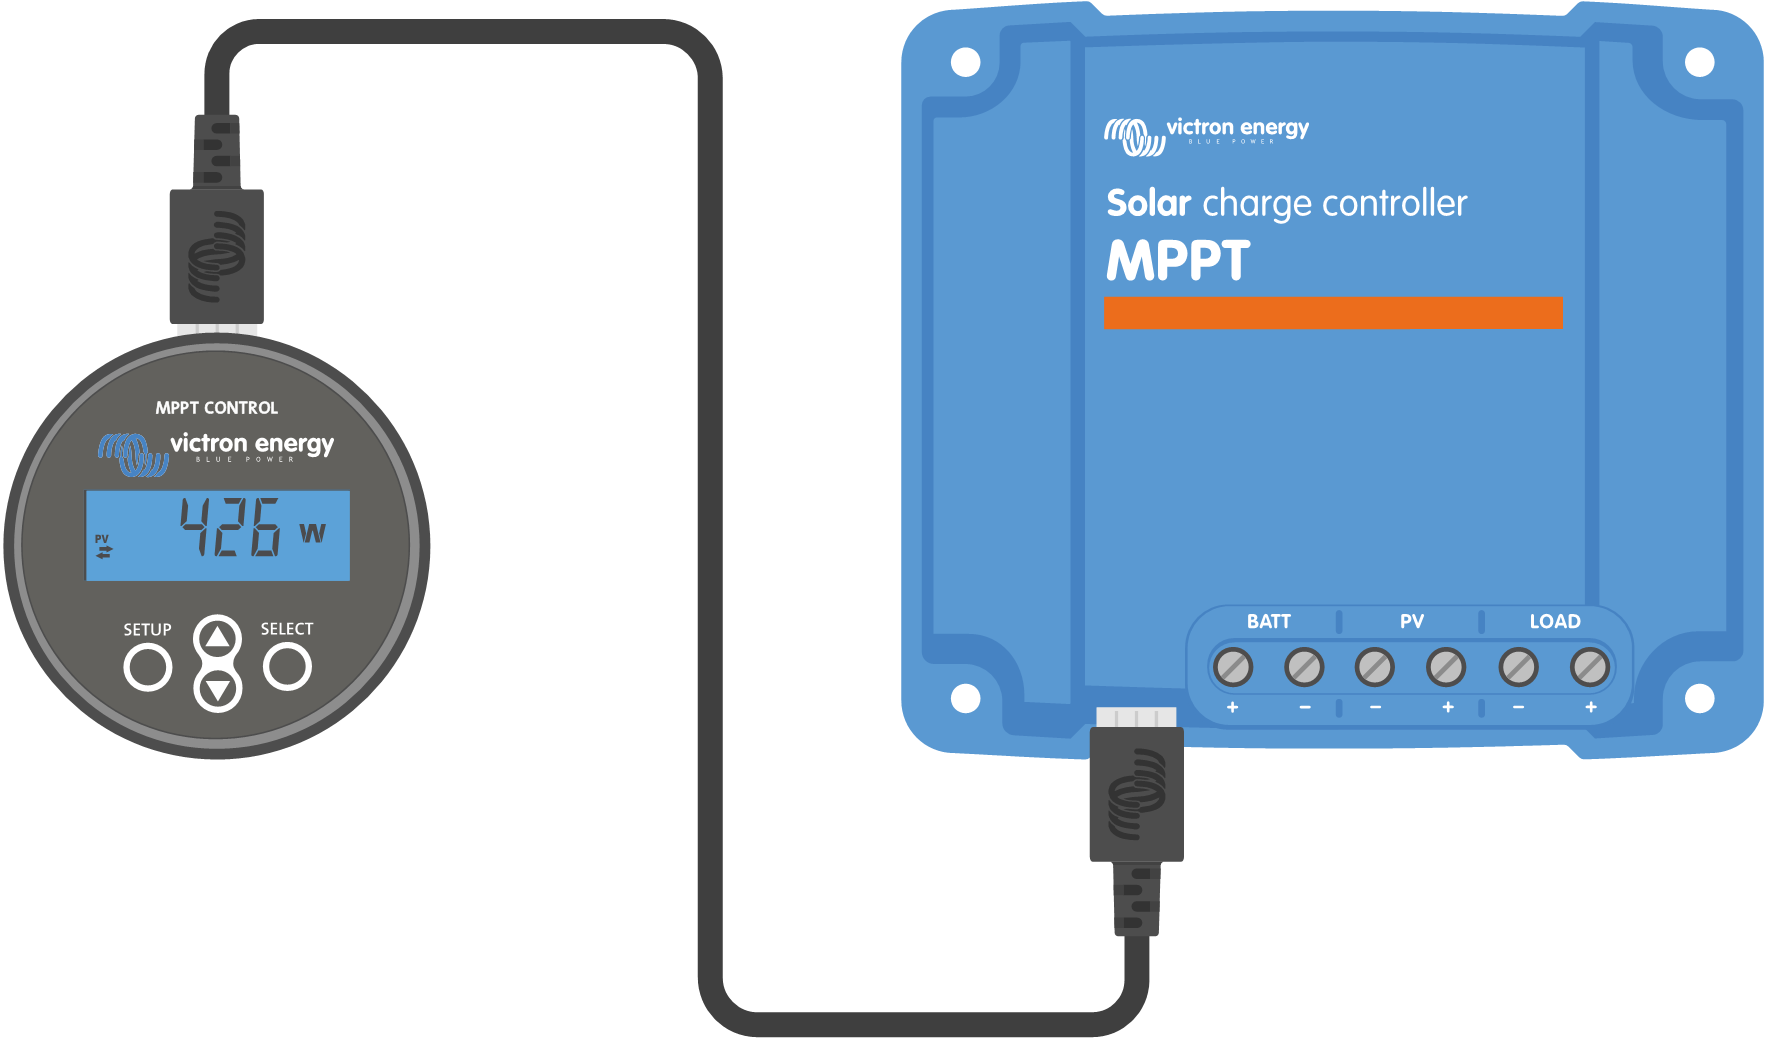 MPPT_S_-_MPPT_Control.png